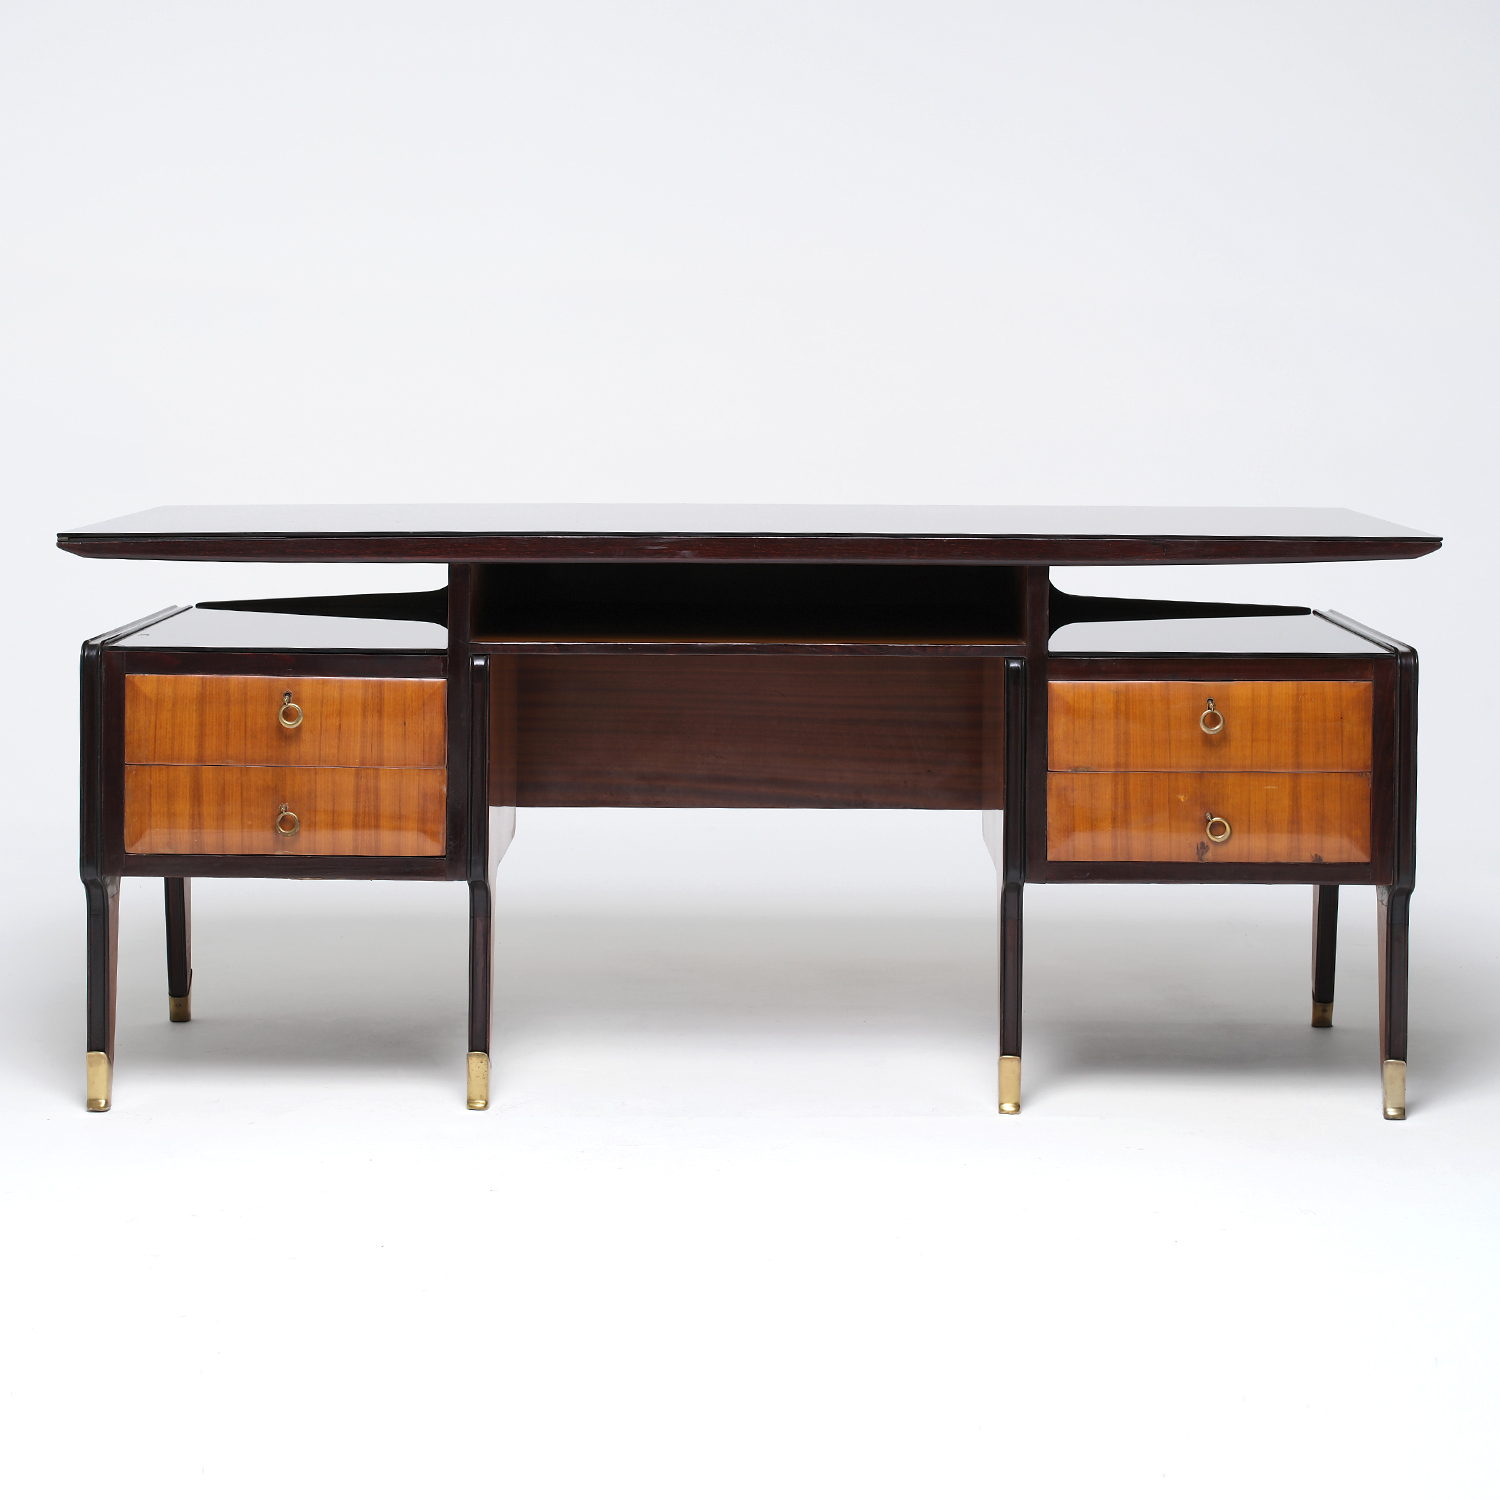 20th Century Italian Mahogany Writing Table – Vintage Desk by Vittorio Dassi